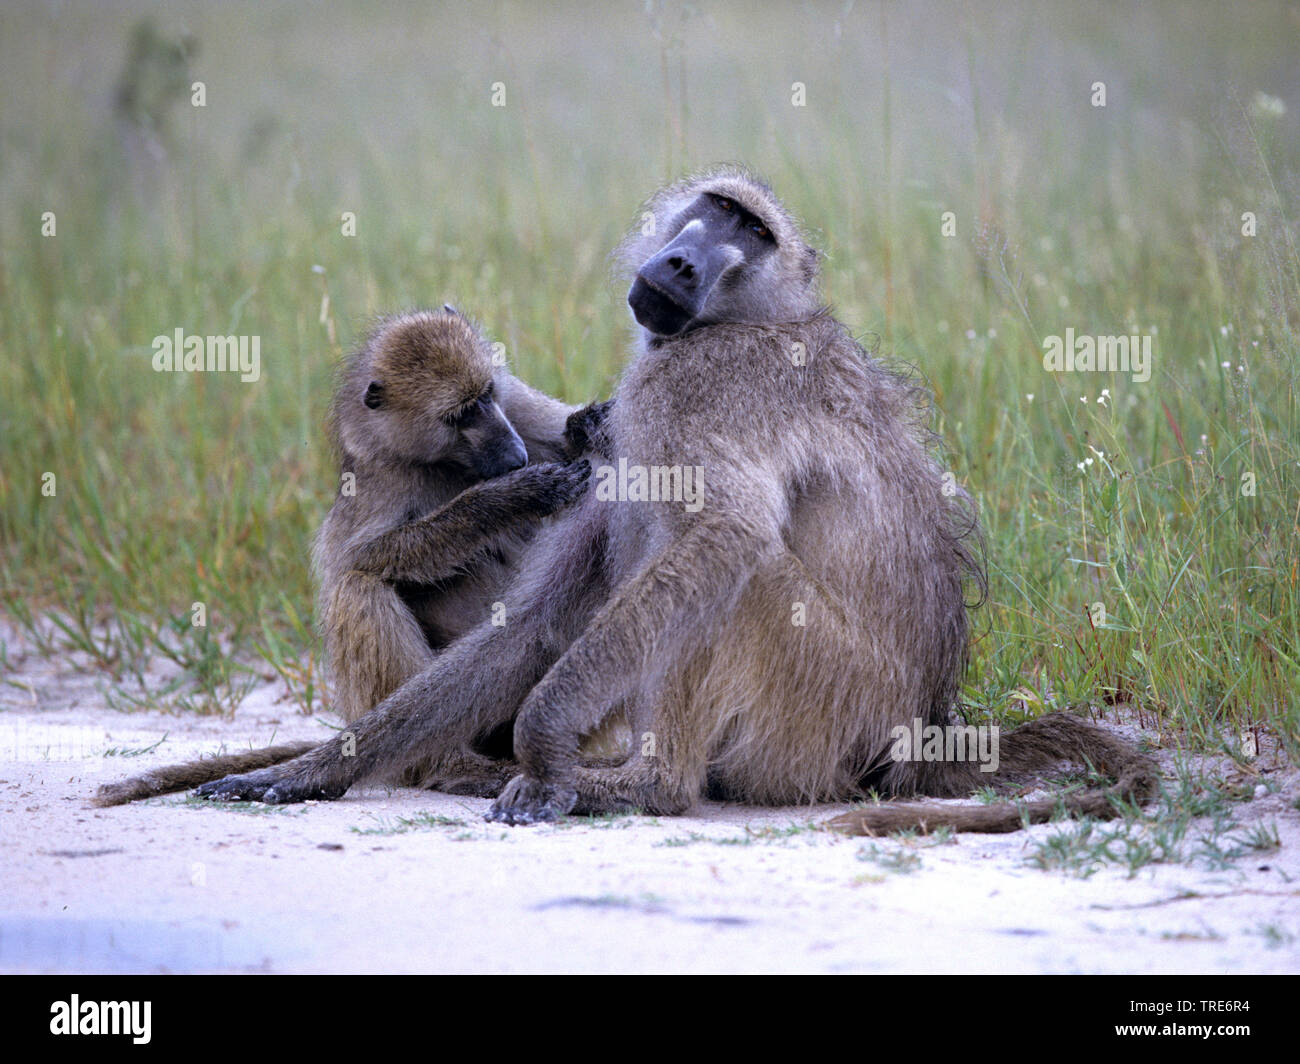 Babuinos de Guinea, al oeste de babuinos (Papio papio), hembra grooming otra hembra Foto de stock